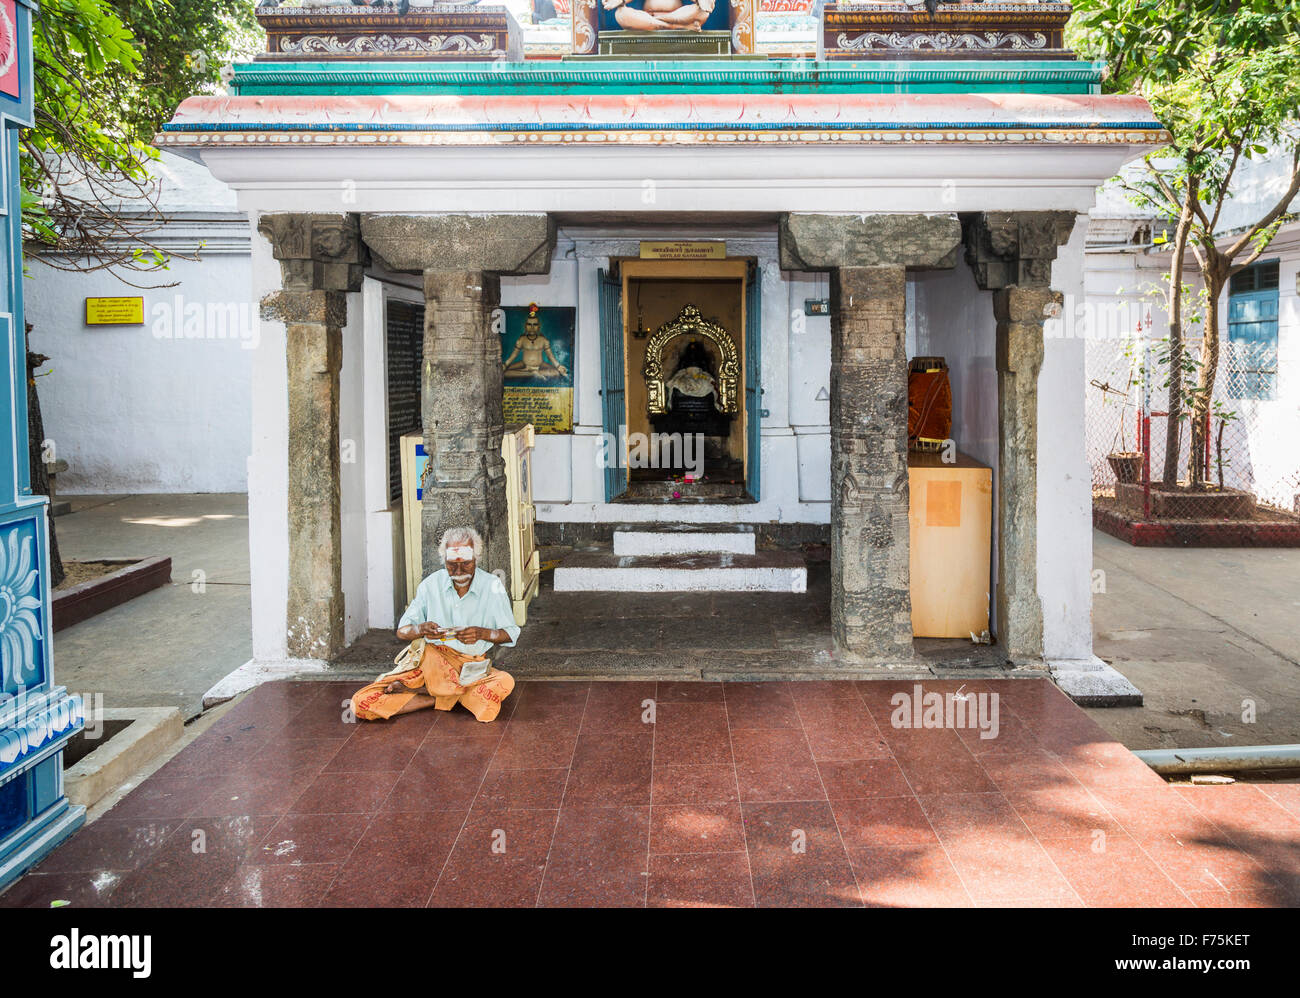 Sadhu holy man sitting outside a shrine in Kapaleeswarar Temple, a Hindu temple of Shiva located in Mylapore, Chennai, Tamil Nadu, south India Stock Photo